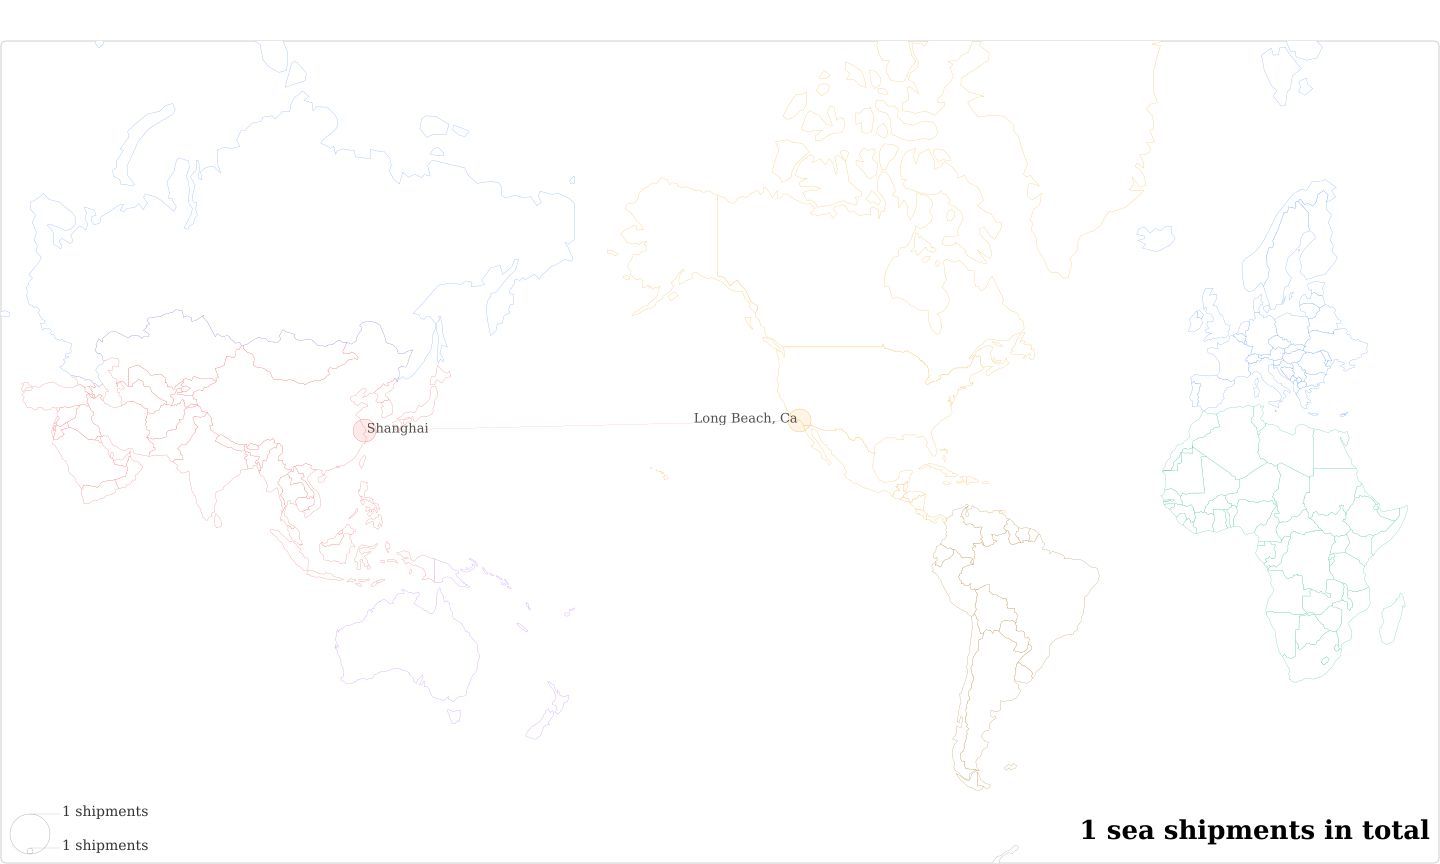 Frank Stillwagon's Imports Per Country Map